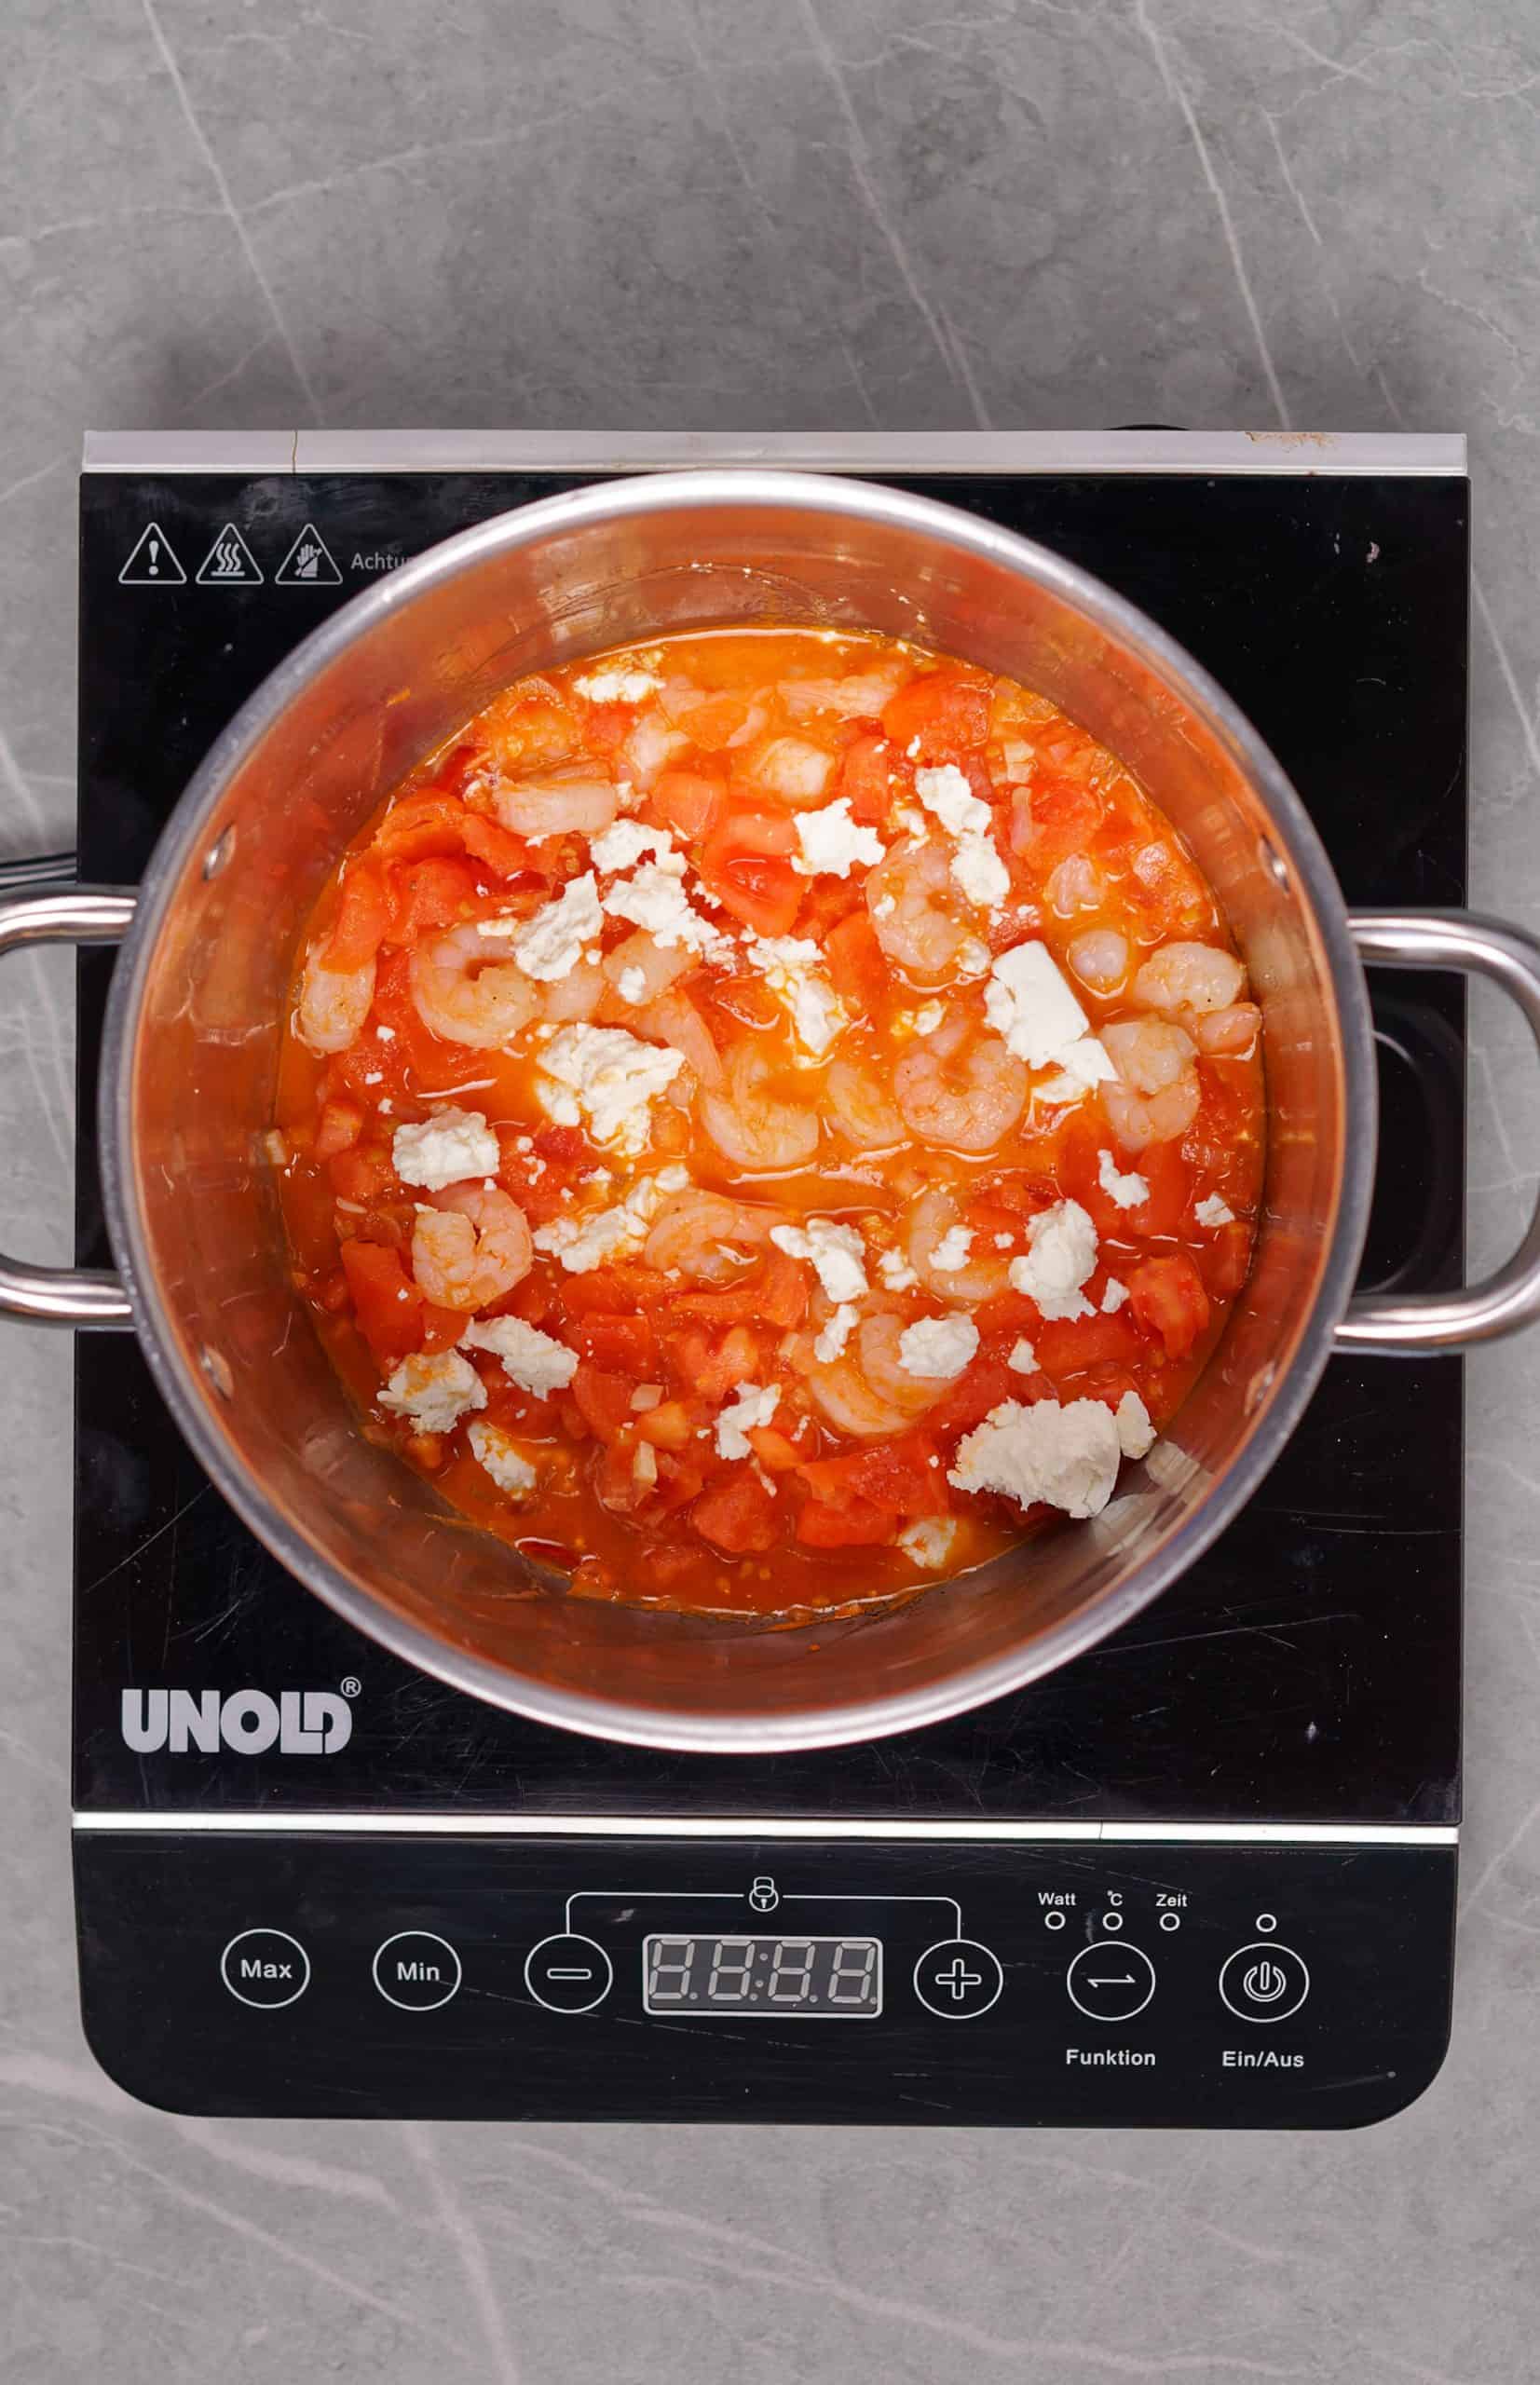 Greek Shrimp Saganaki recipe with Feta cheese (Garides Saganaki) - mixing the shrimp and sauce together